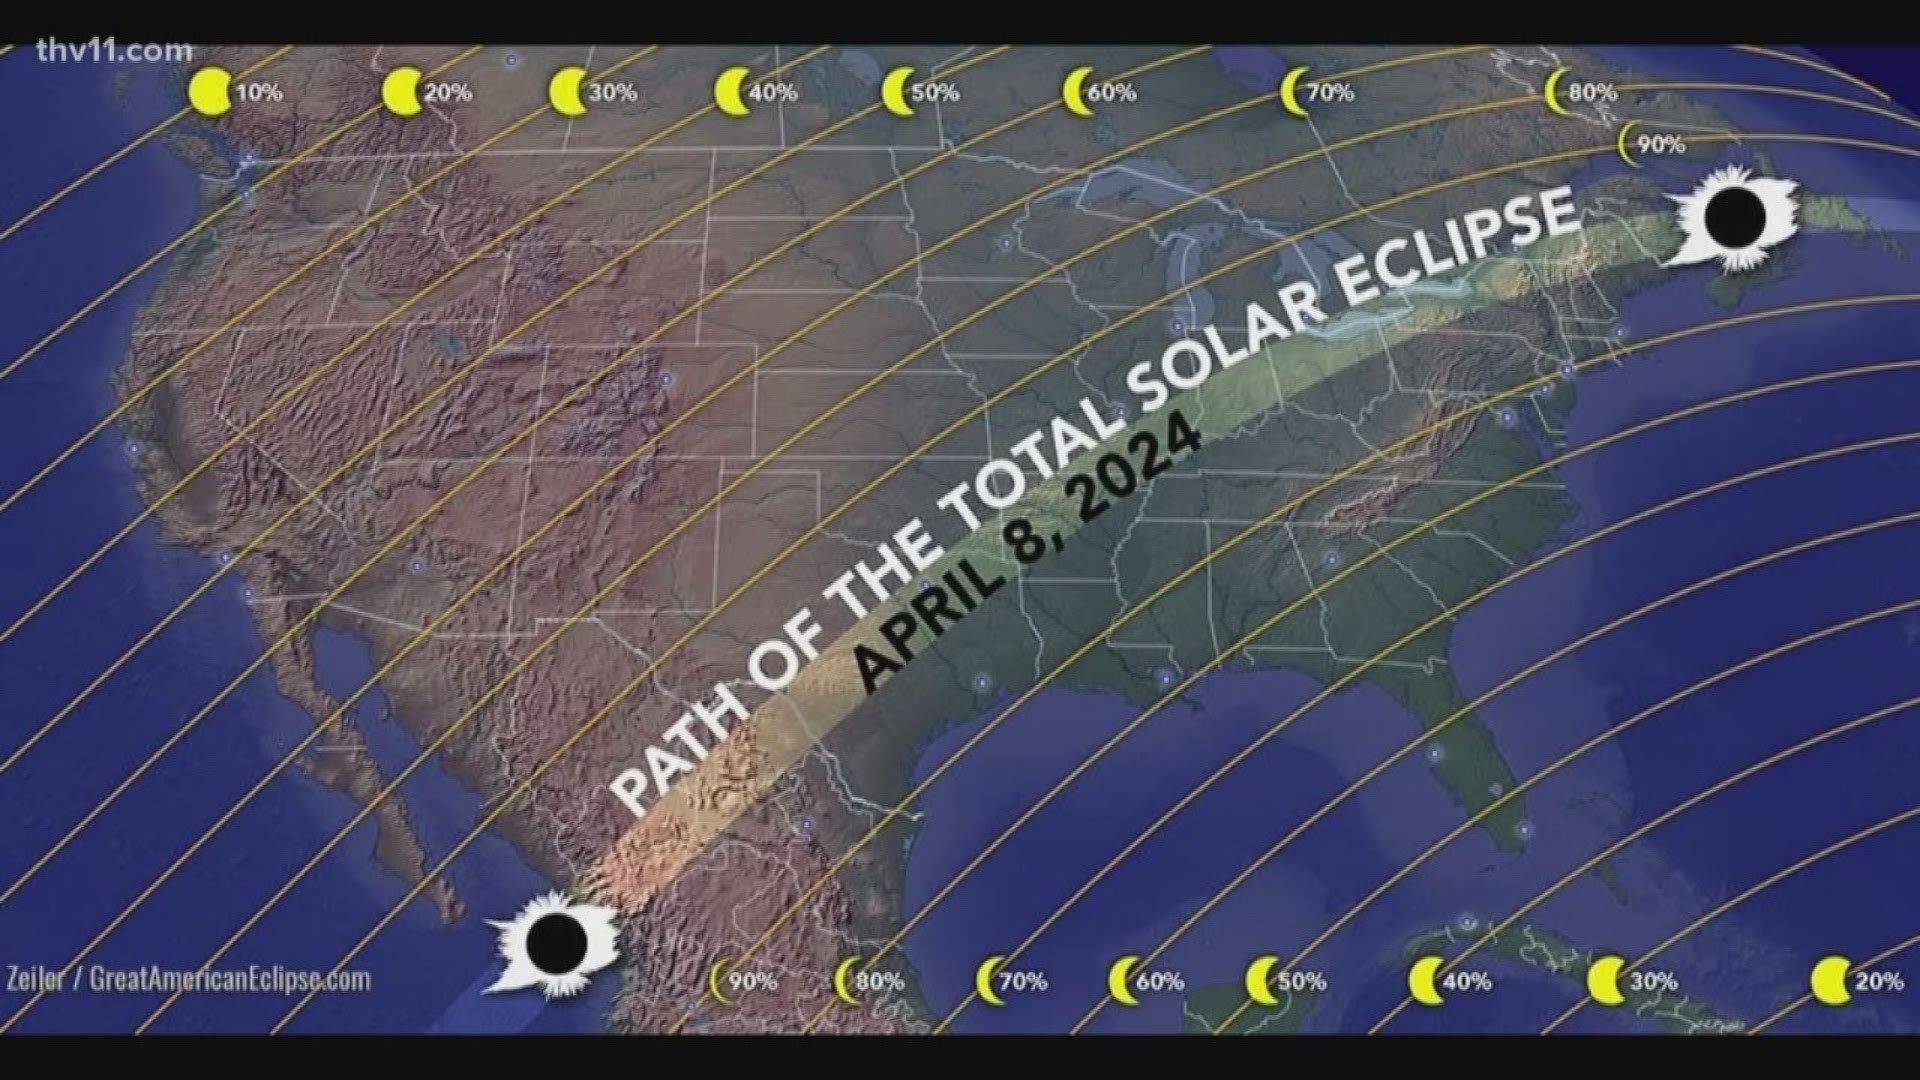 Total Solar Eclipse April 8 2024 Path Time Lapse Angil Tabbie